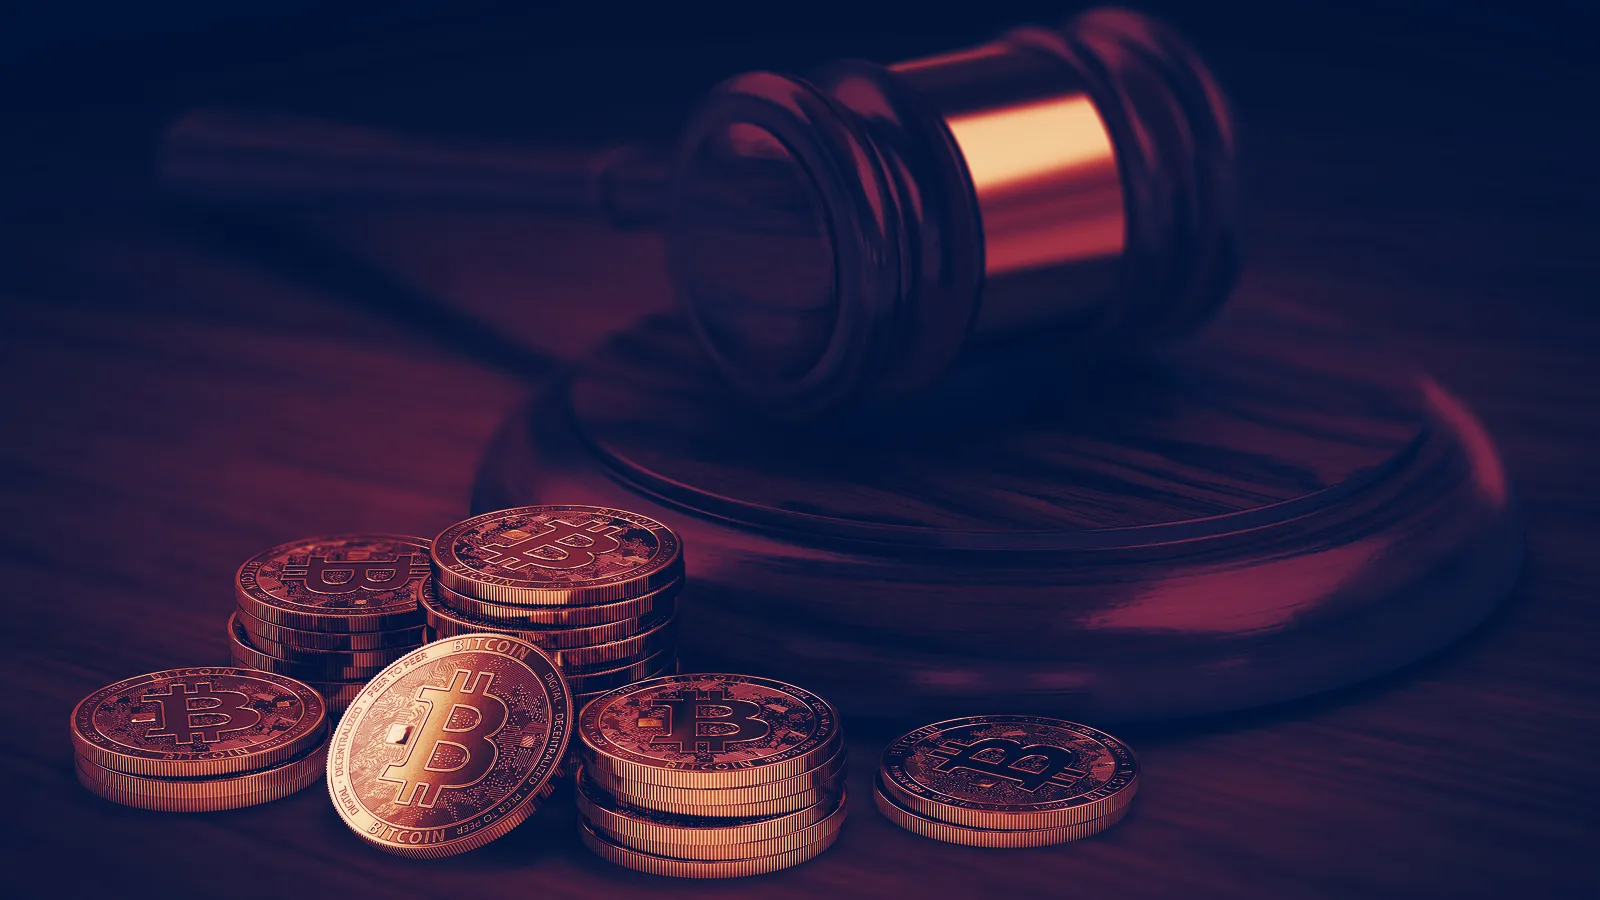 Judge Beth Bloom granted the motion to postpone Craig Wright's billion-dollar Bitcoin trial. Image: Shutterstock